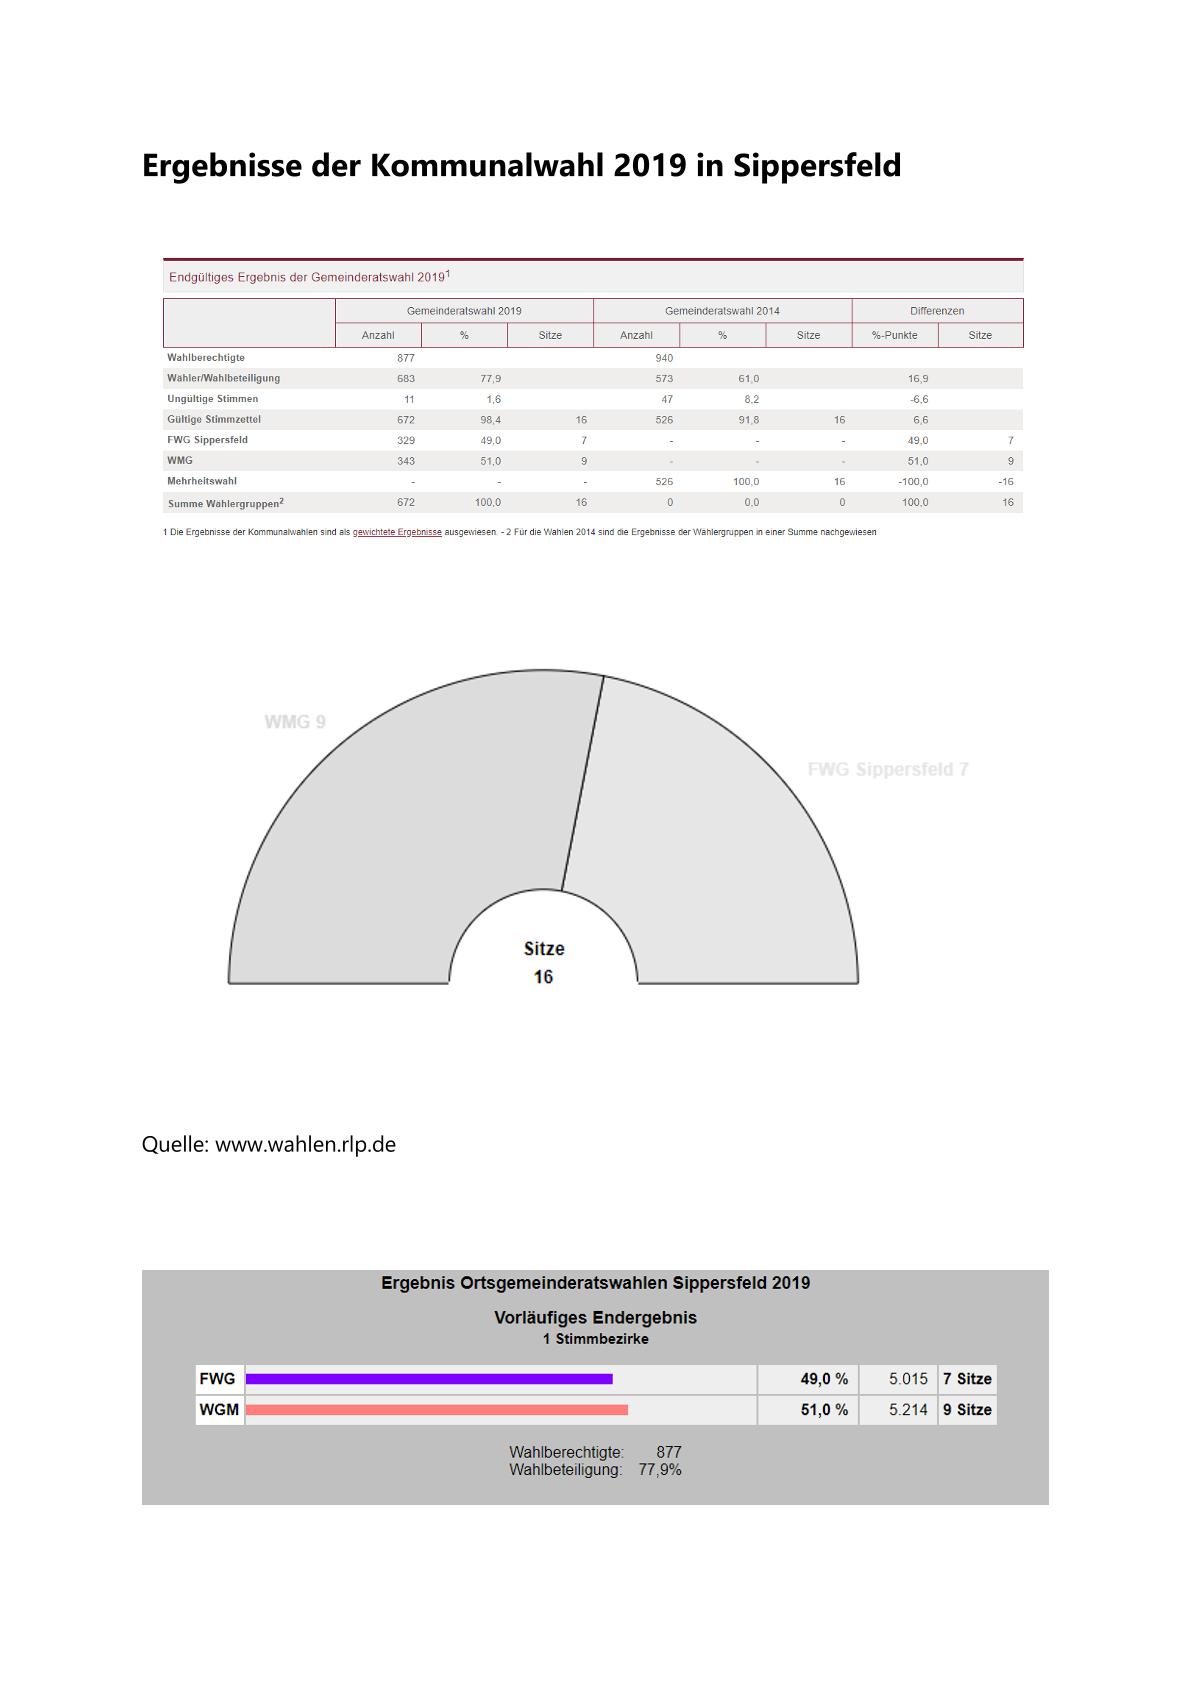 Ergebnise der Kommunalwahl 2019 in Sippersfeld 0001